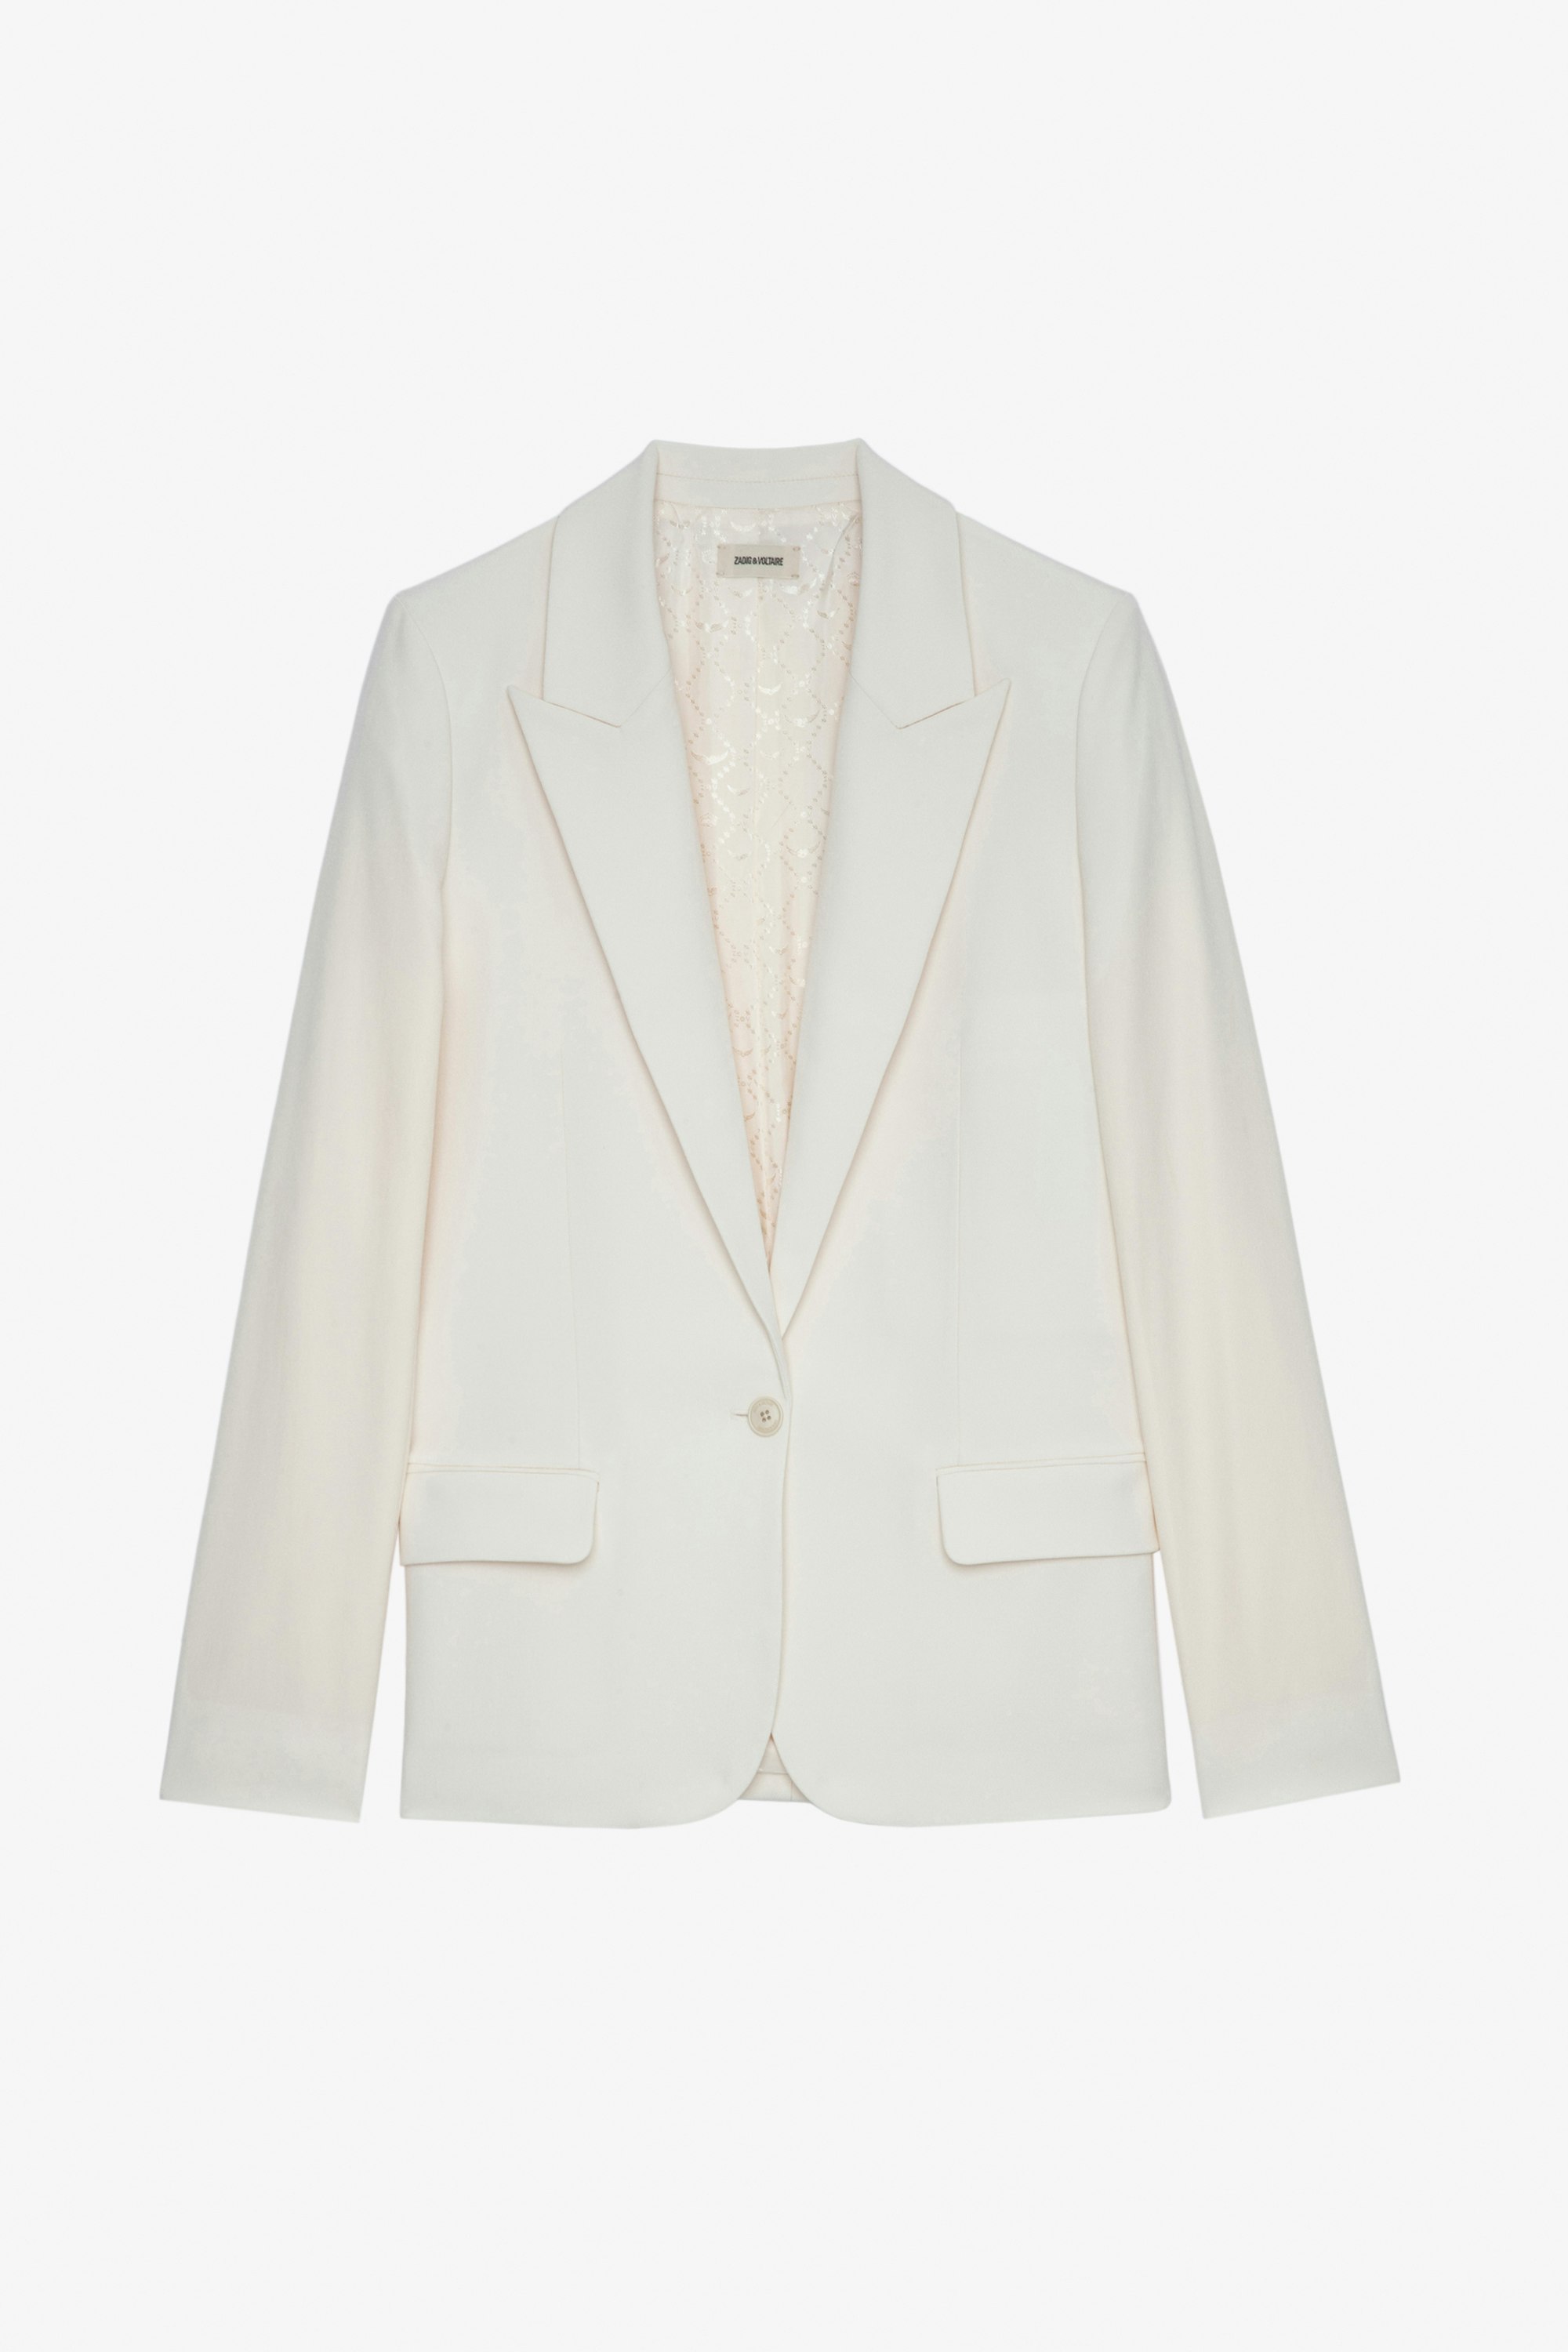 Voyage Jacket Women’s white tailored jacket